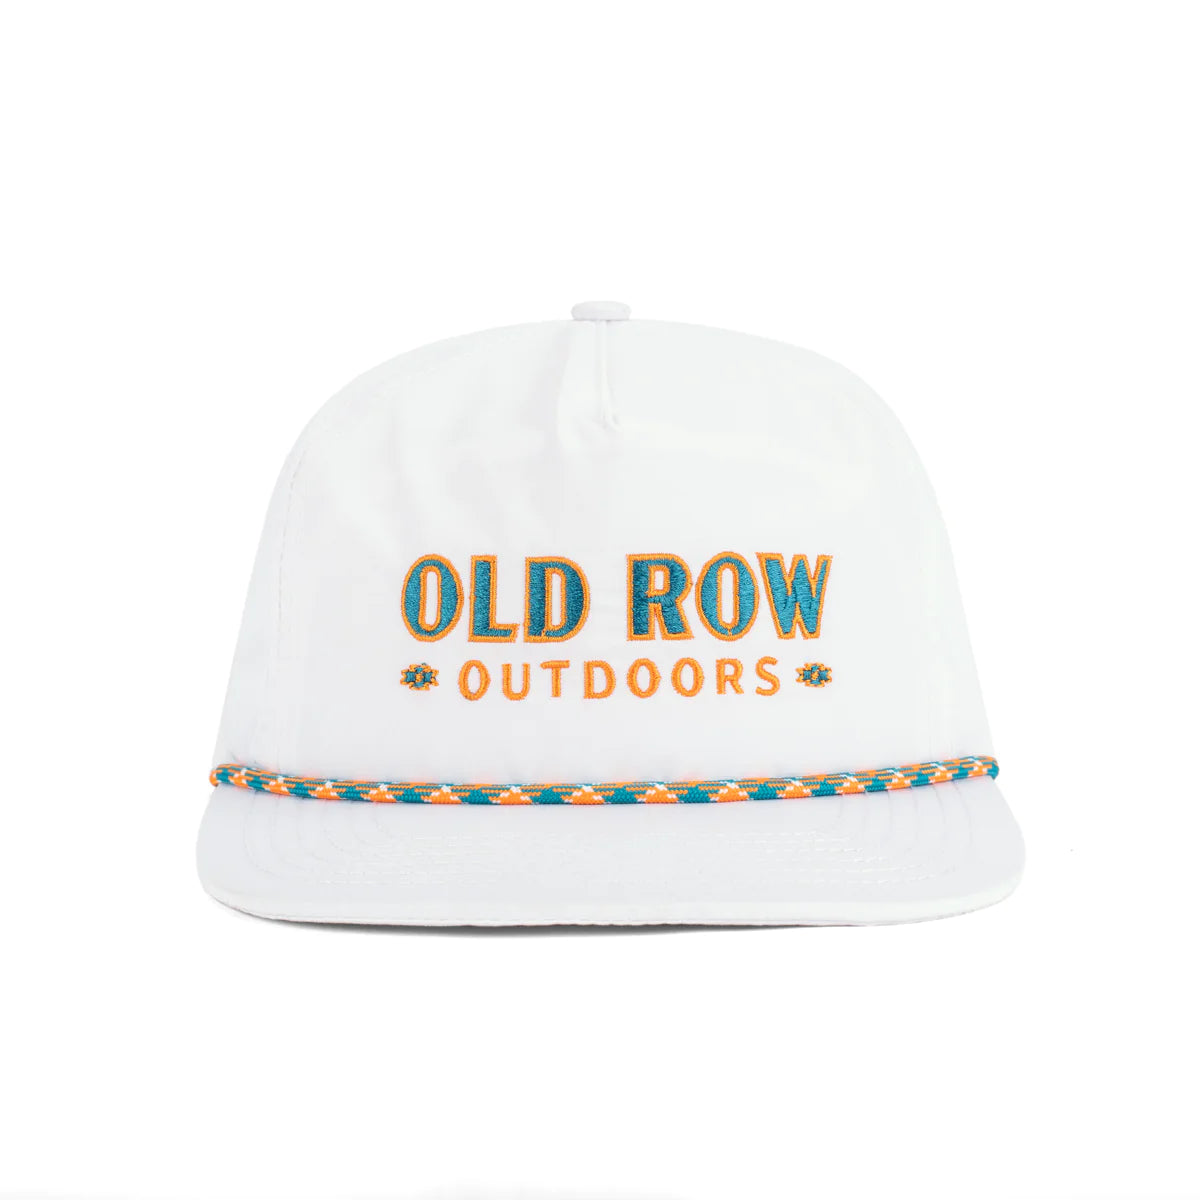 Old Row Nylon Rope Hat